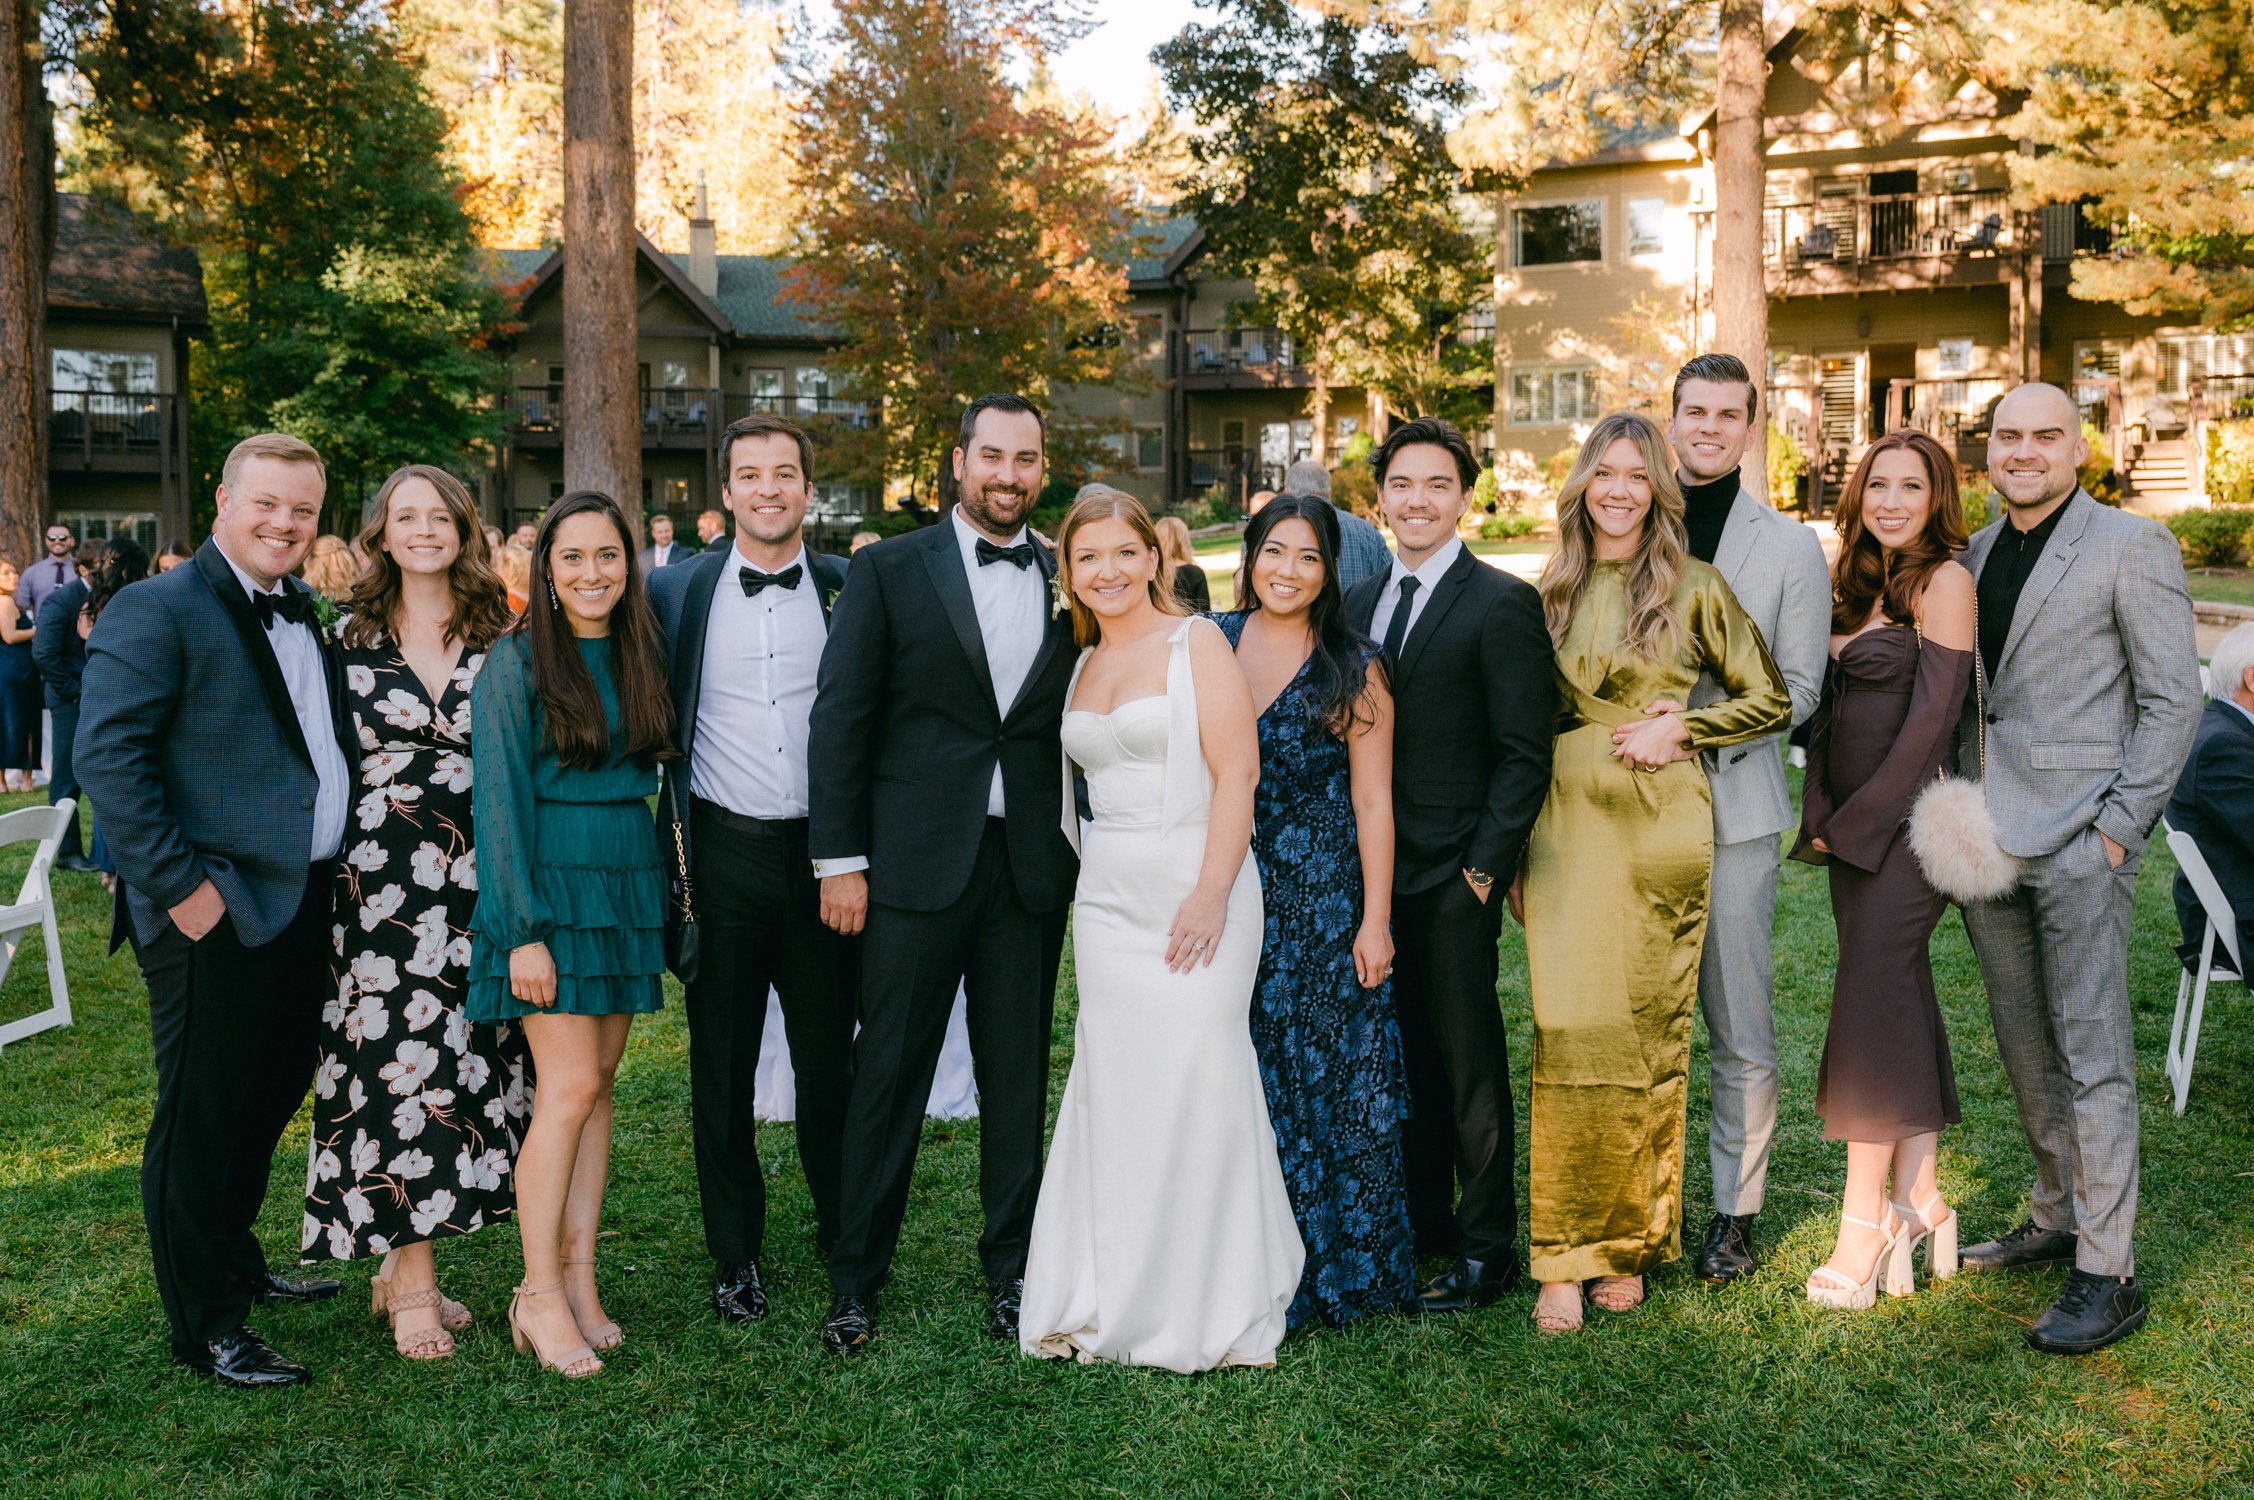 Hyatt Lake Tahoe wedding, photo of wedding couple with their friends